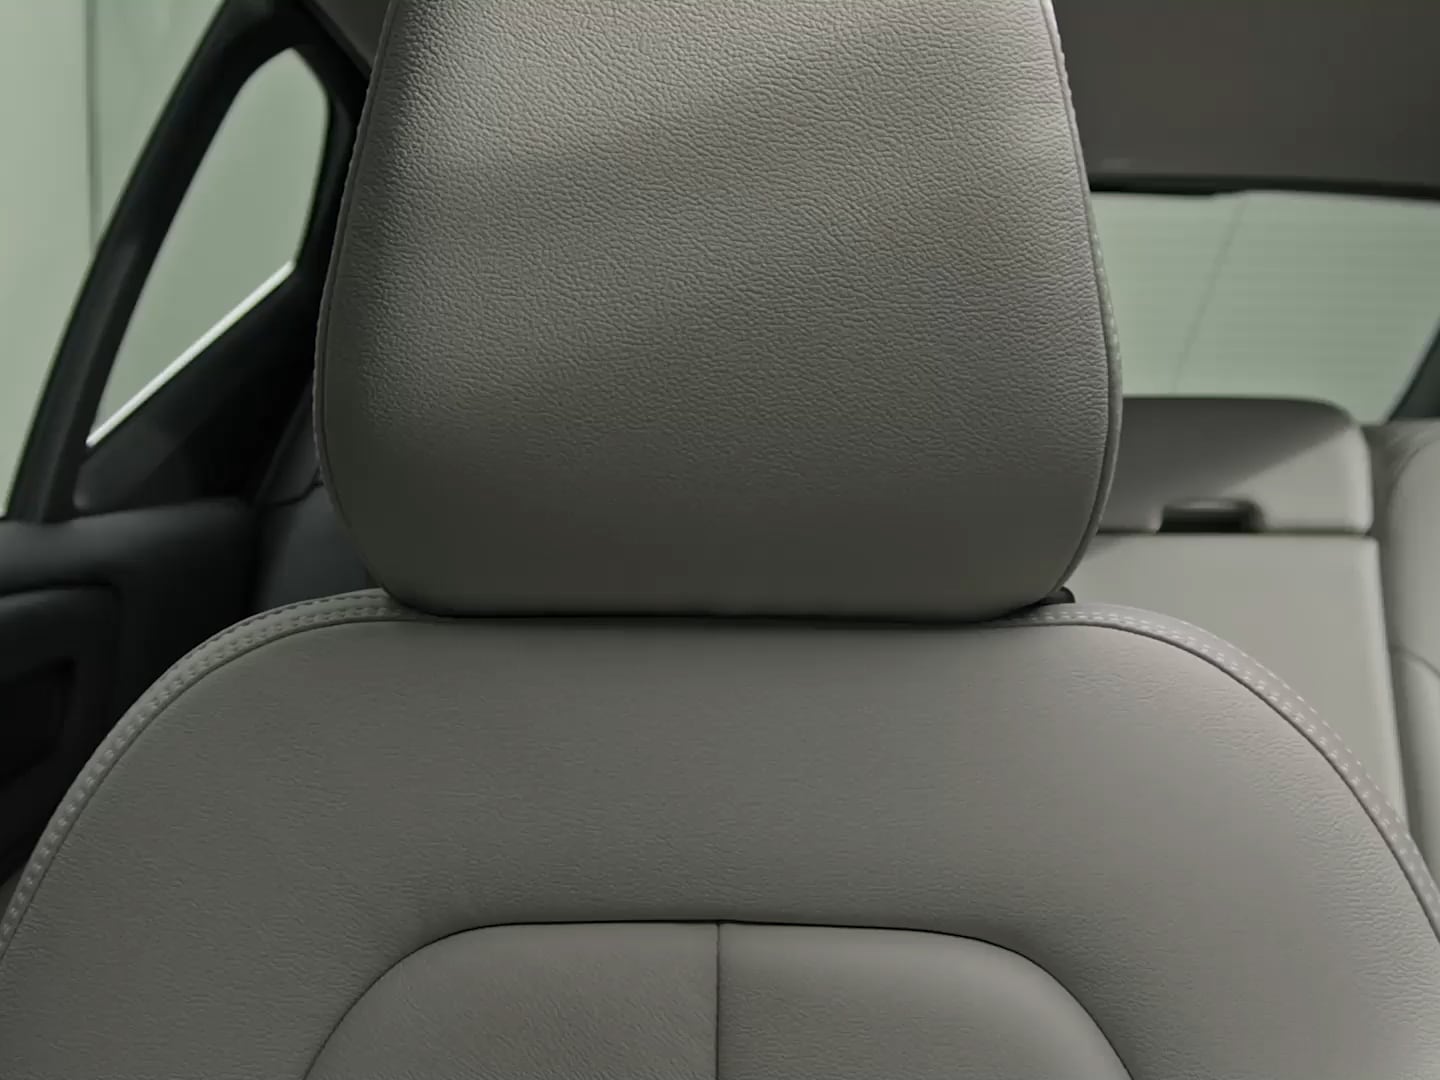 The Volvo XC40 mild hybrid’s front passenger leather headrest.